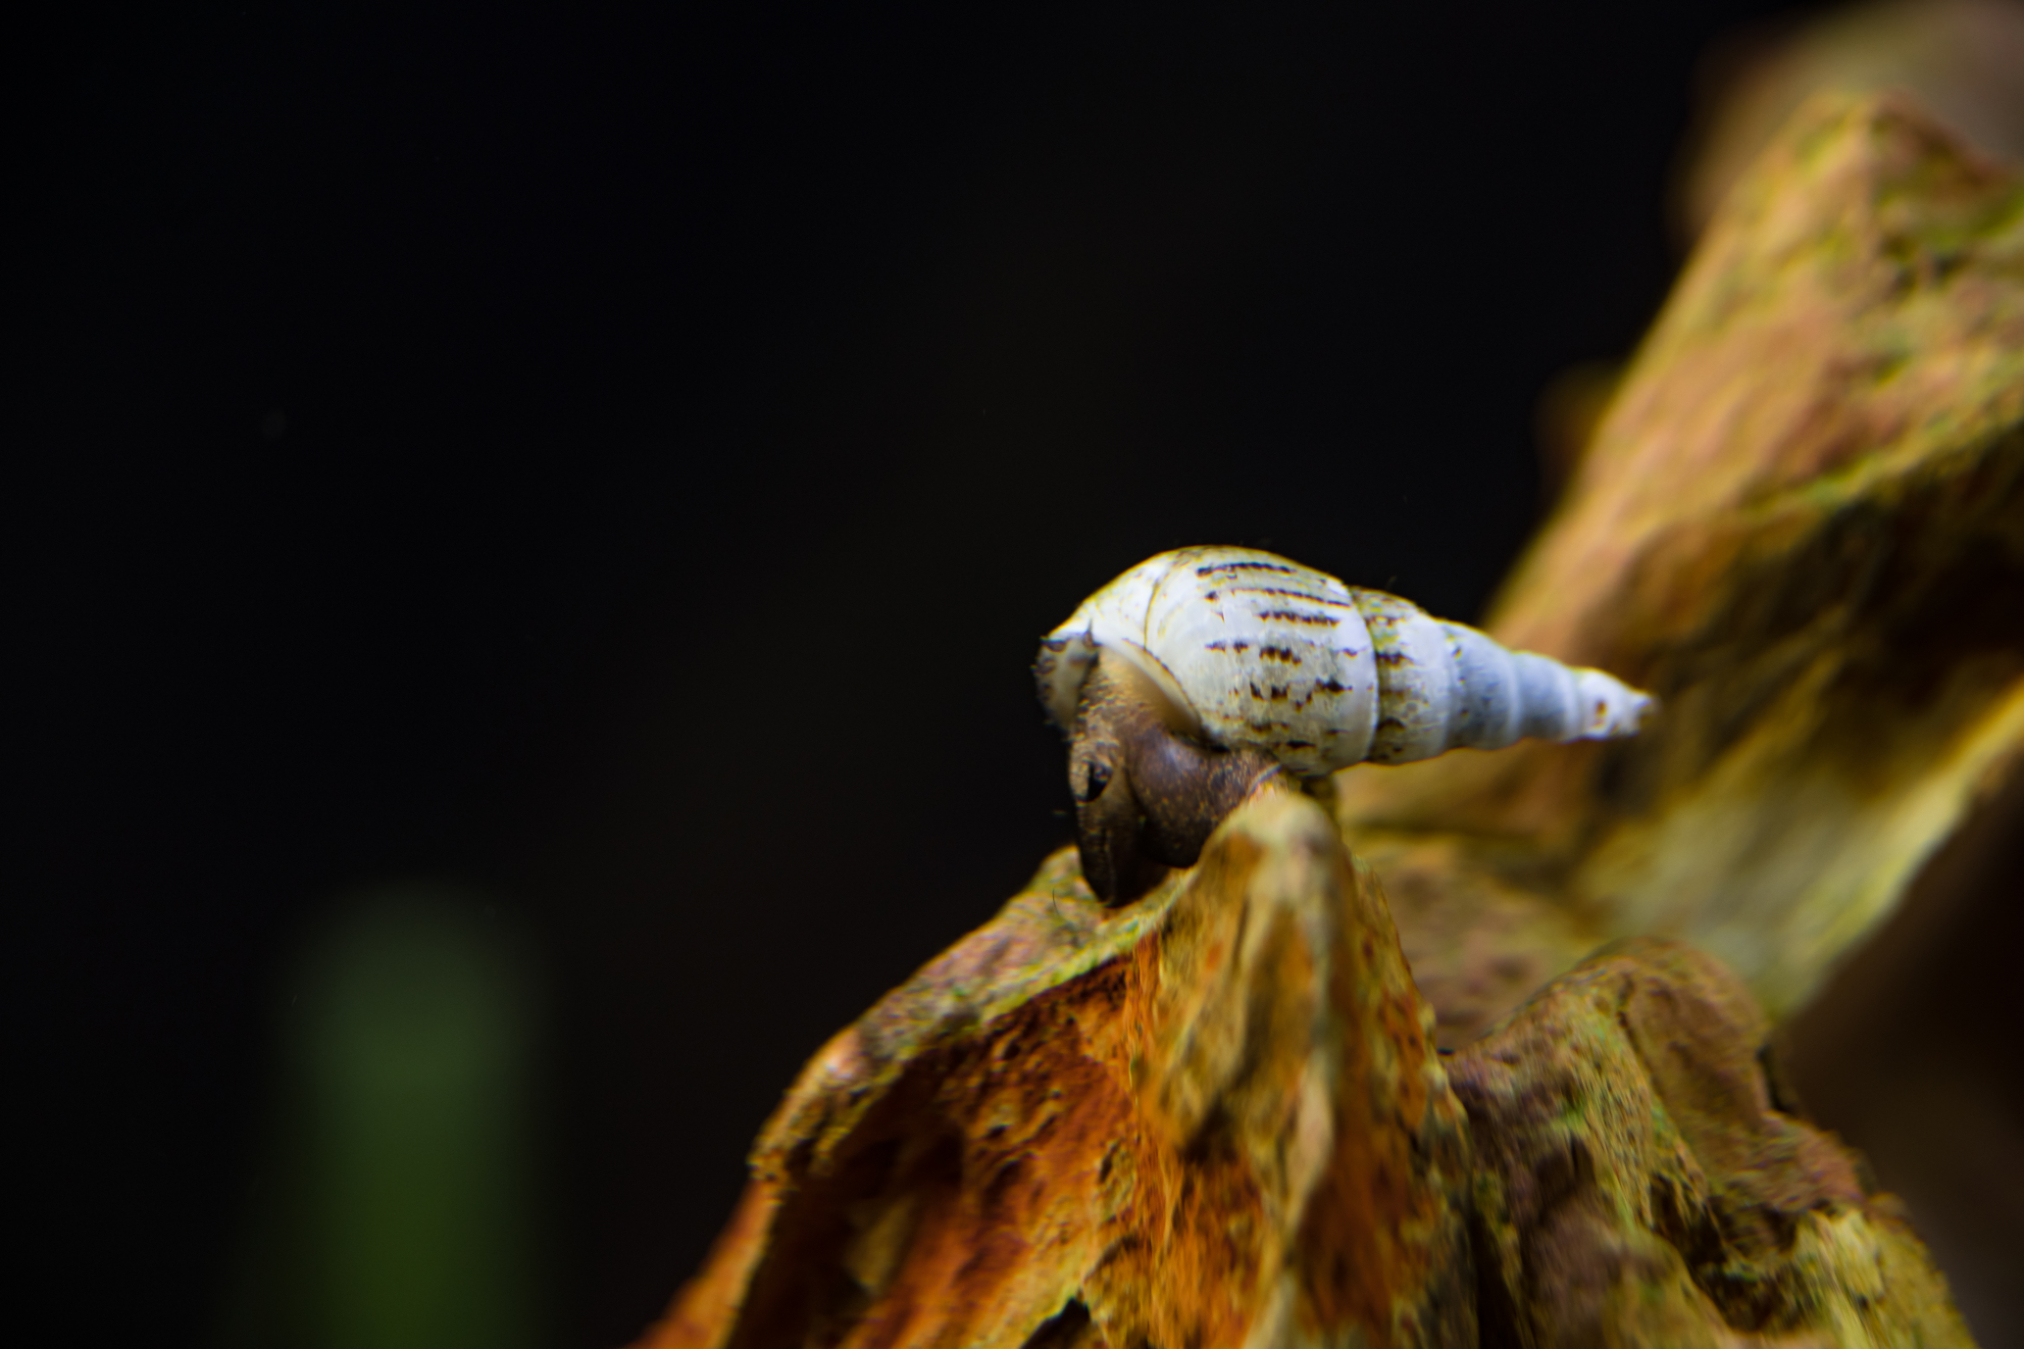 Malaysian snail